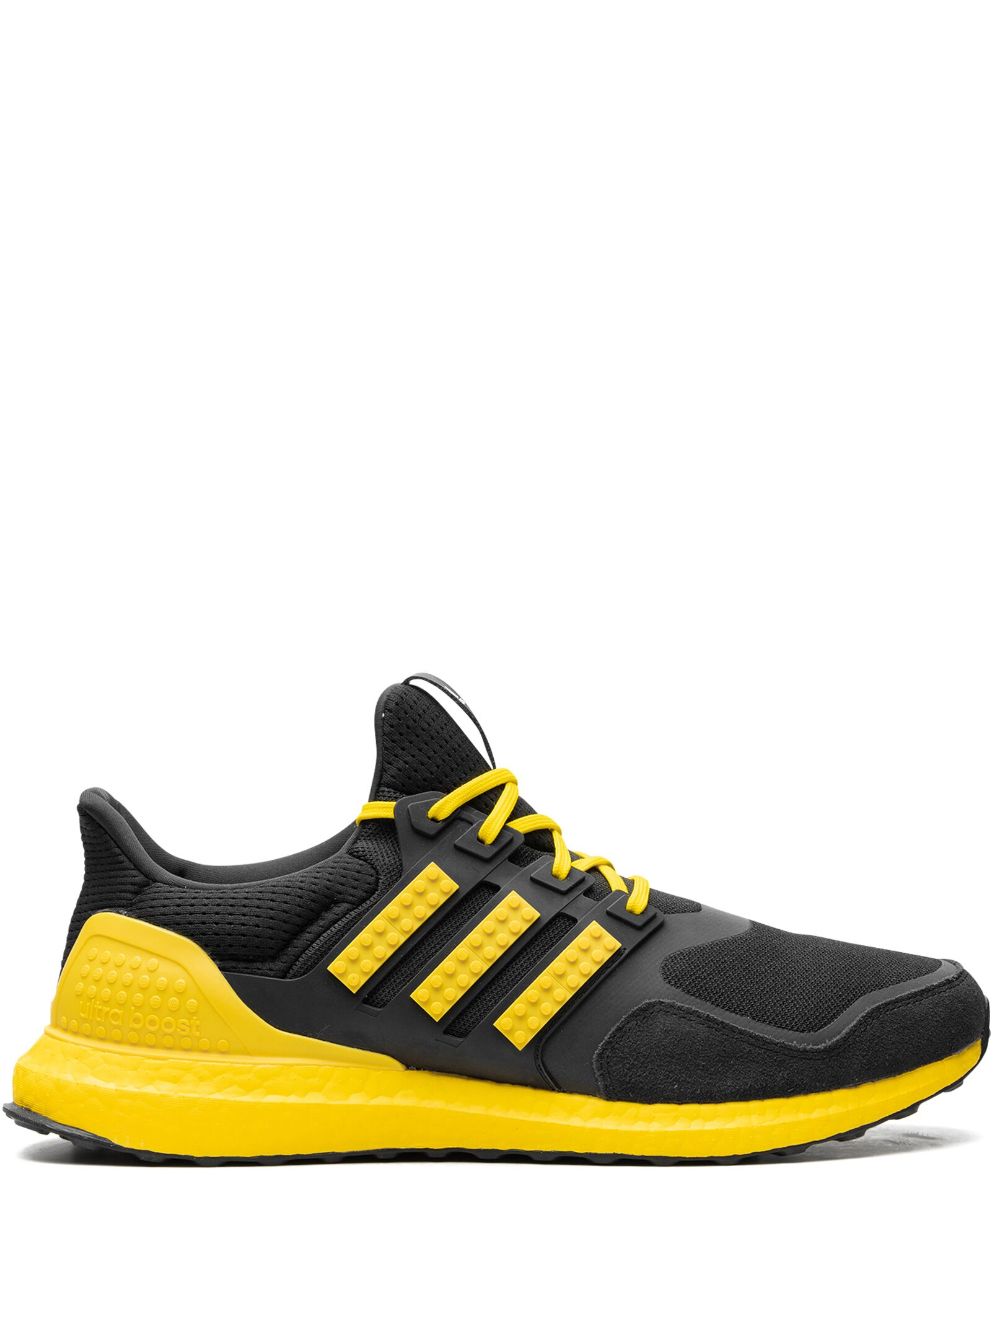 adidas x Lego Ultraboost DNA Core Black/Yellow/Core Black Sneakers - Schwarz von adidas